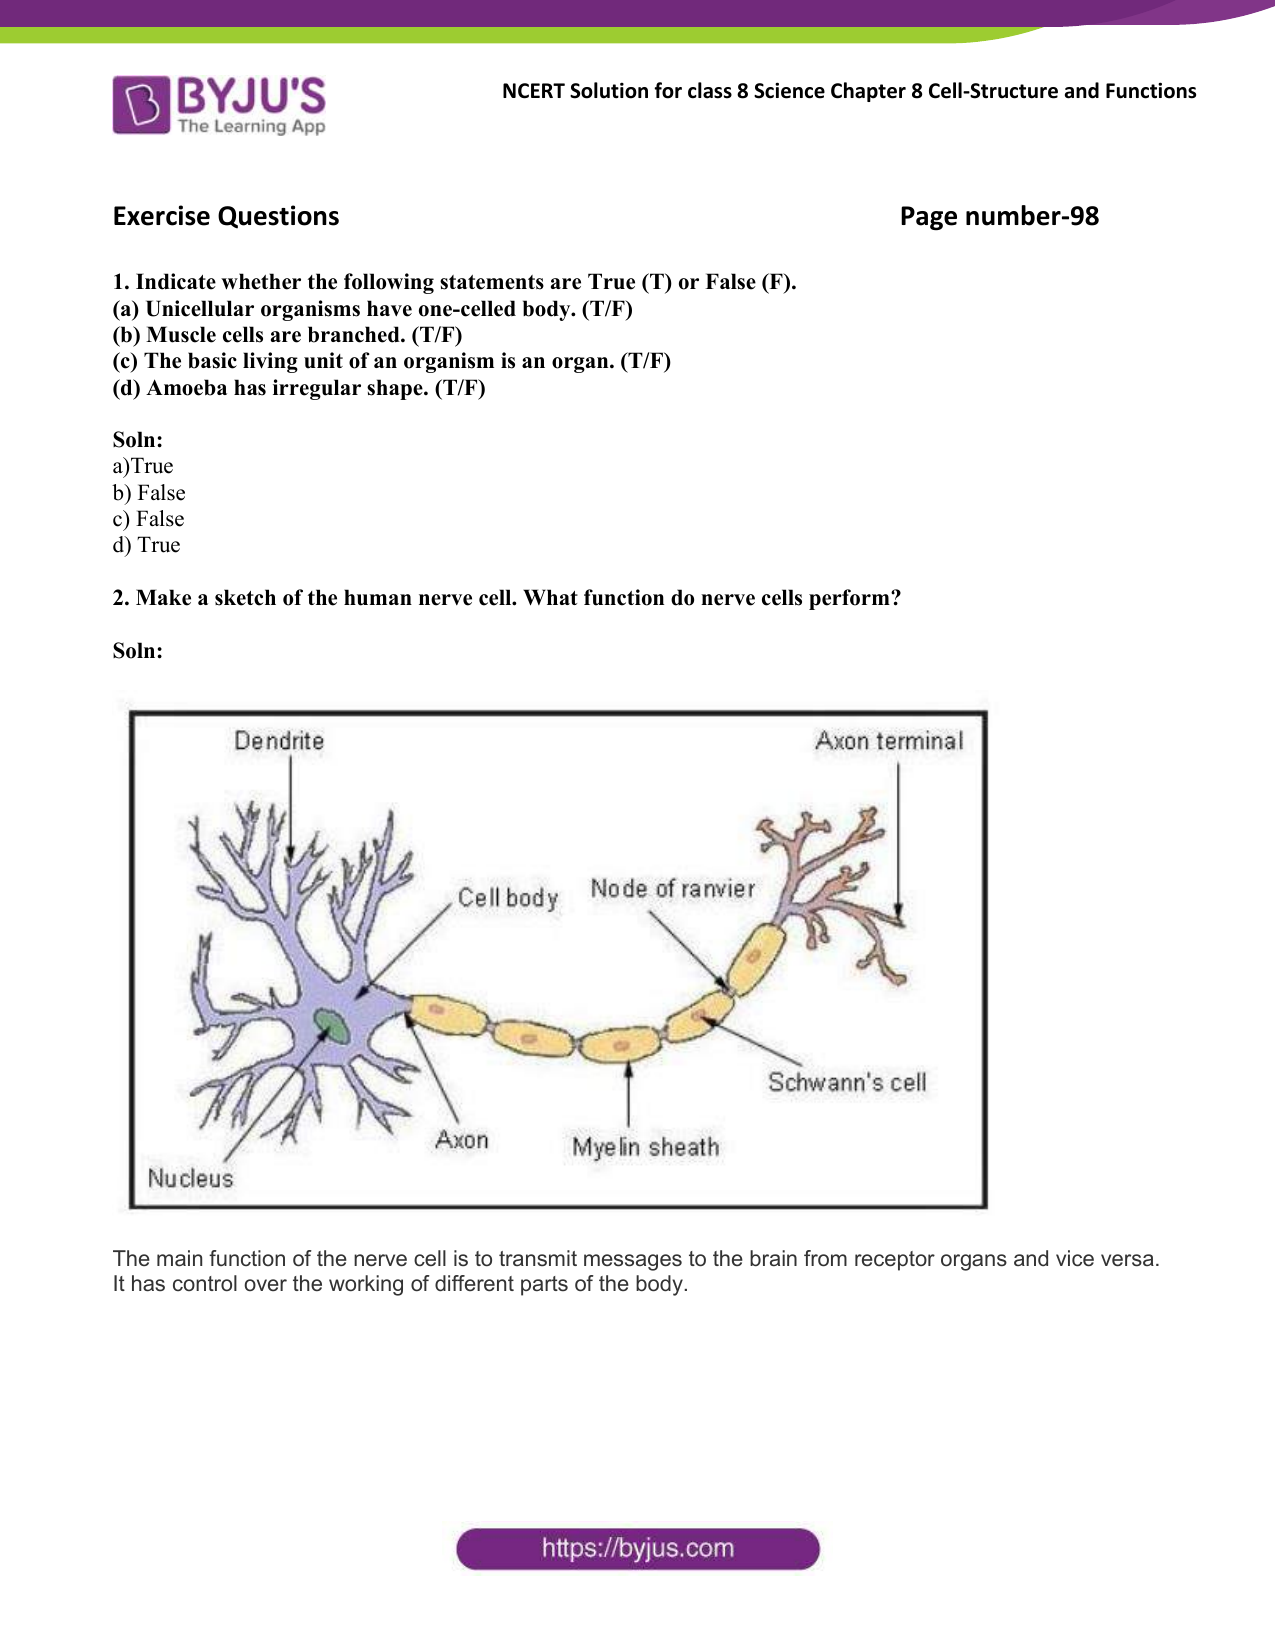 Nerve Cell Function | Nerve Cell Diagram | DK Find Out